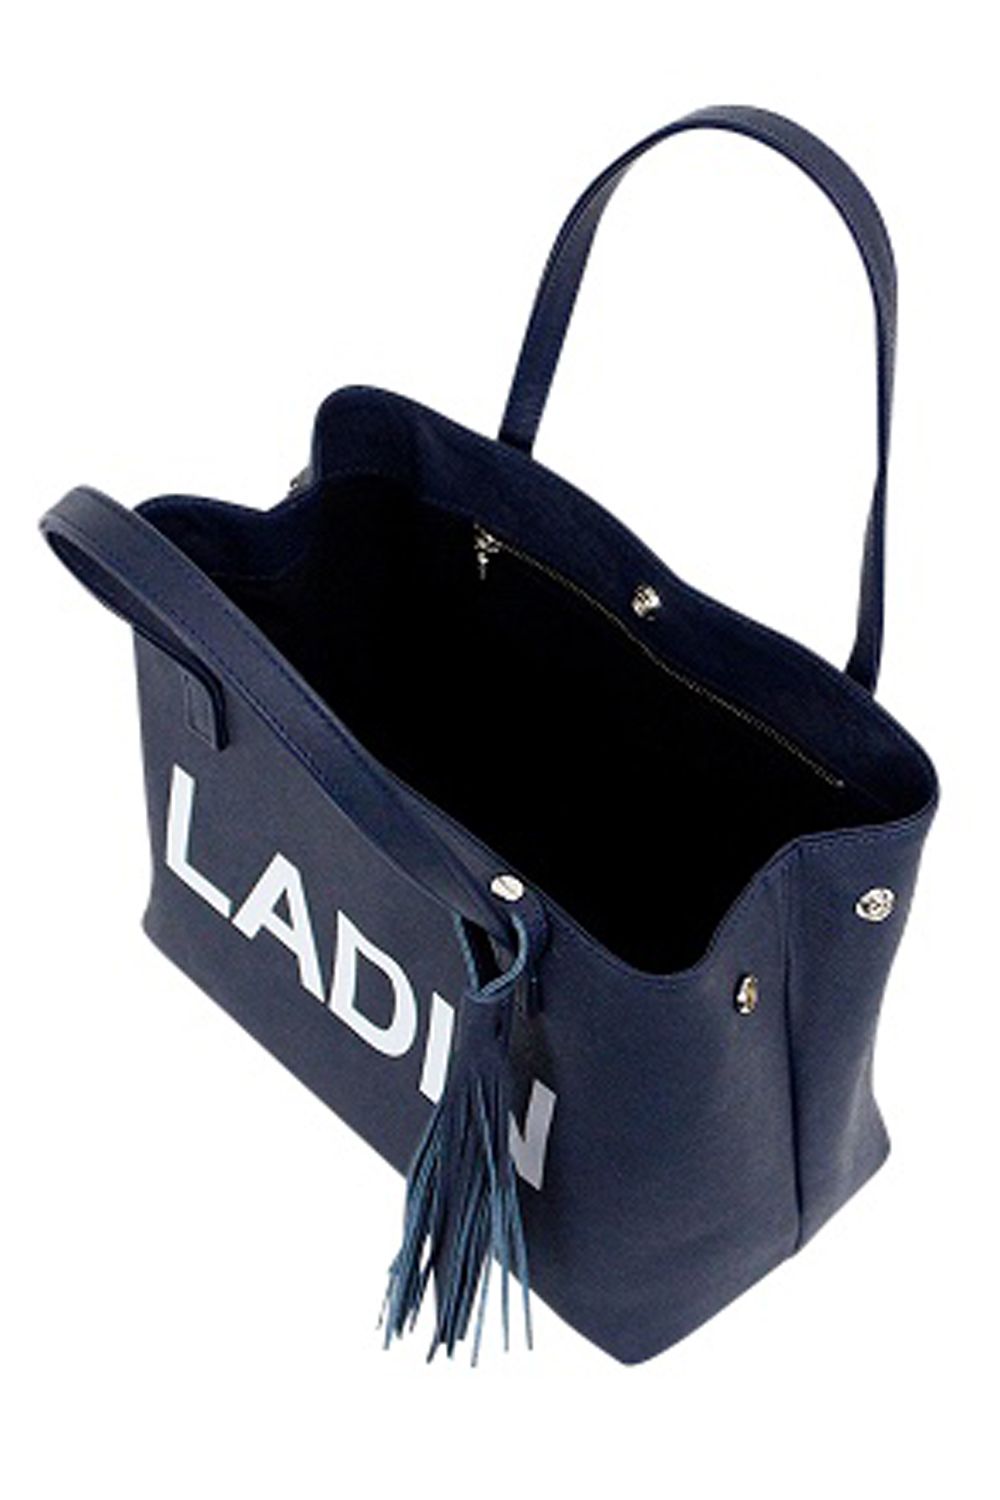 LADIN - BAG / トート型 ミニカートバッグ ネイビー | GOSSIP GOLF